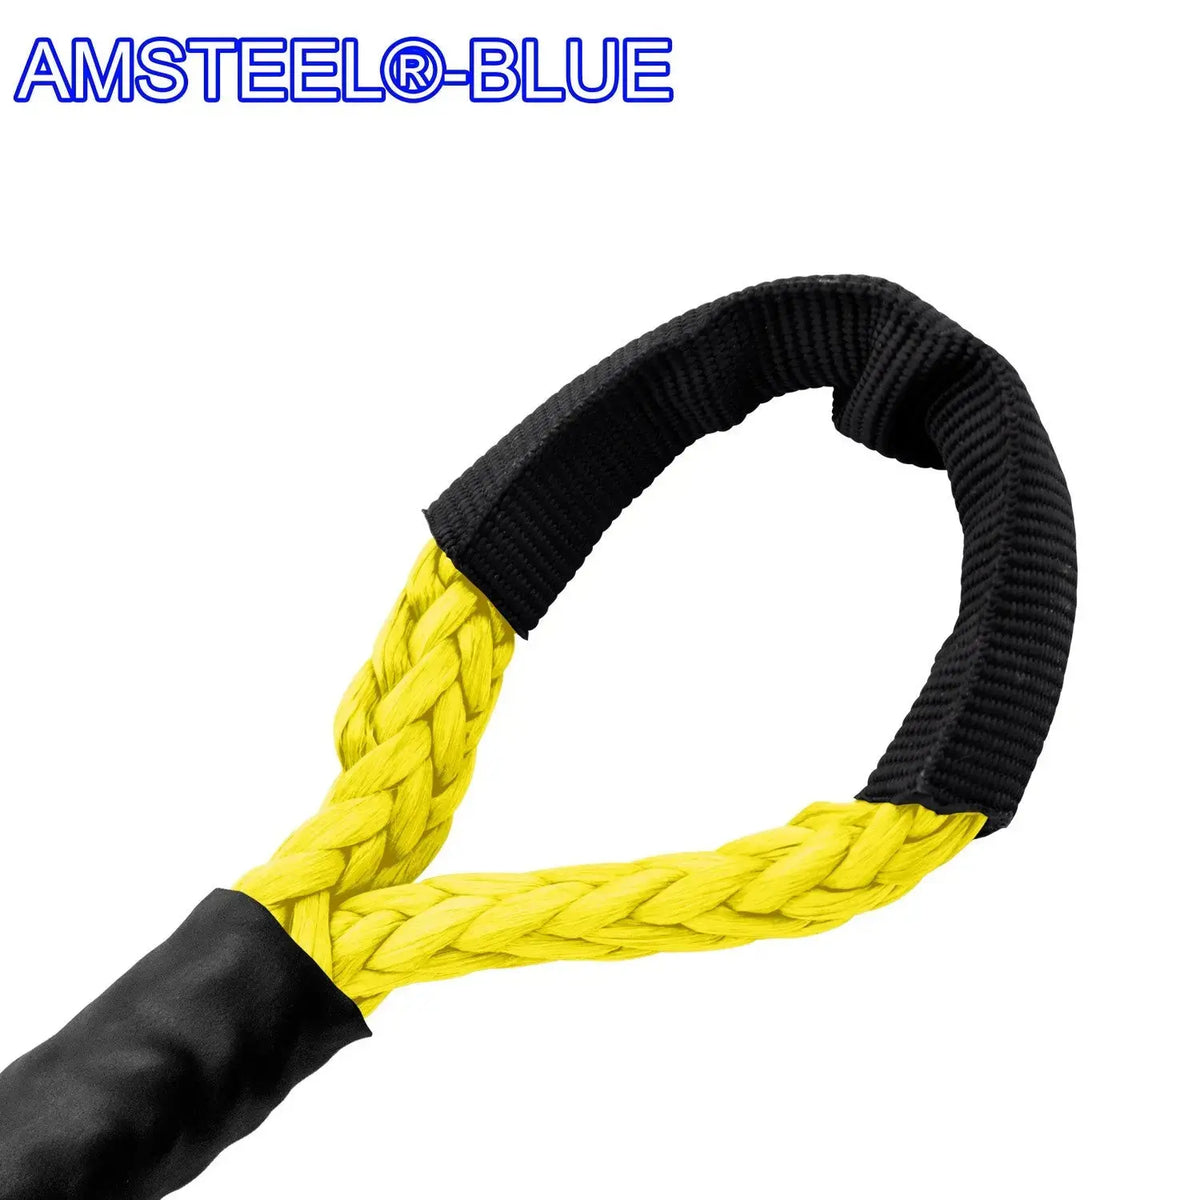 3/16" X 50' Main Line Winch Rope - AmSteel Blue Yellow-Soft-Eye Custom Splice